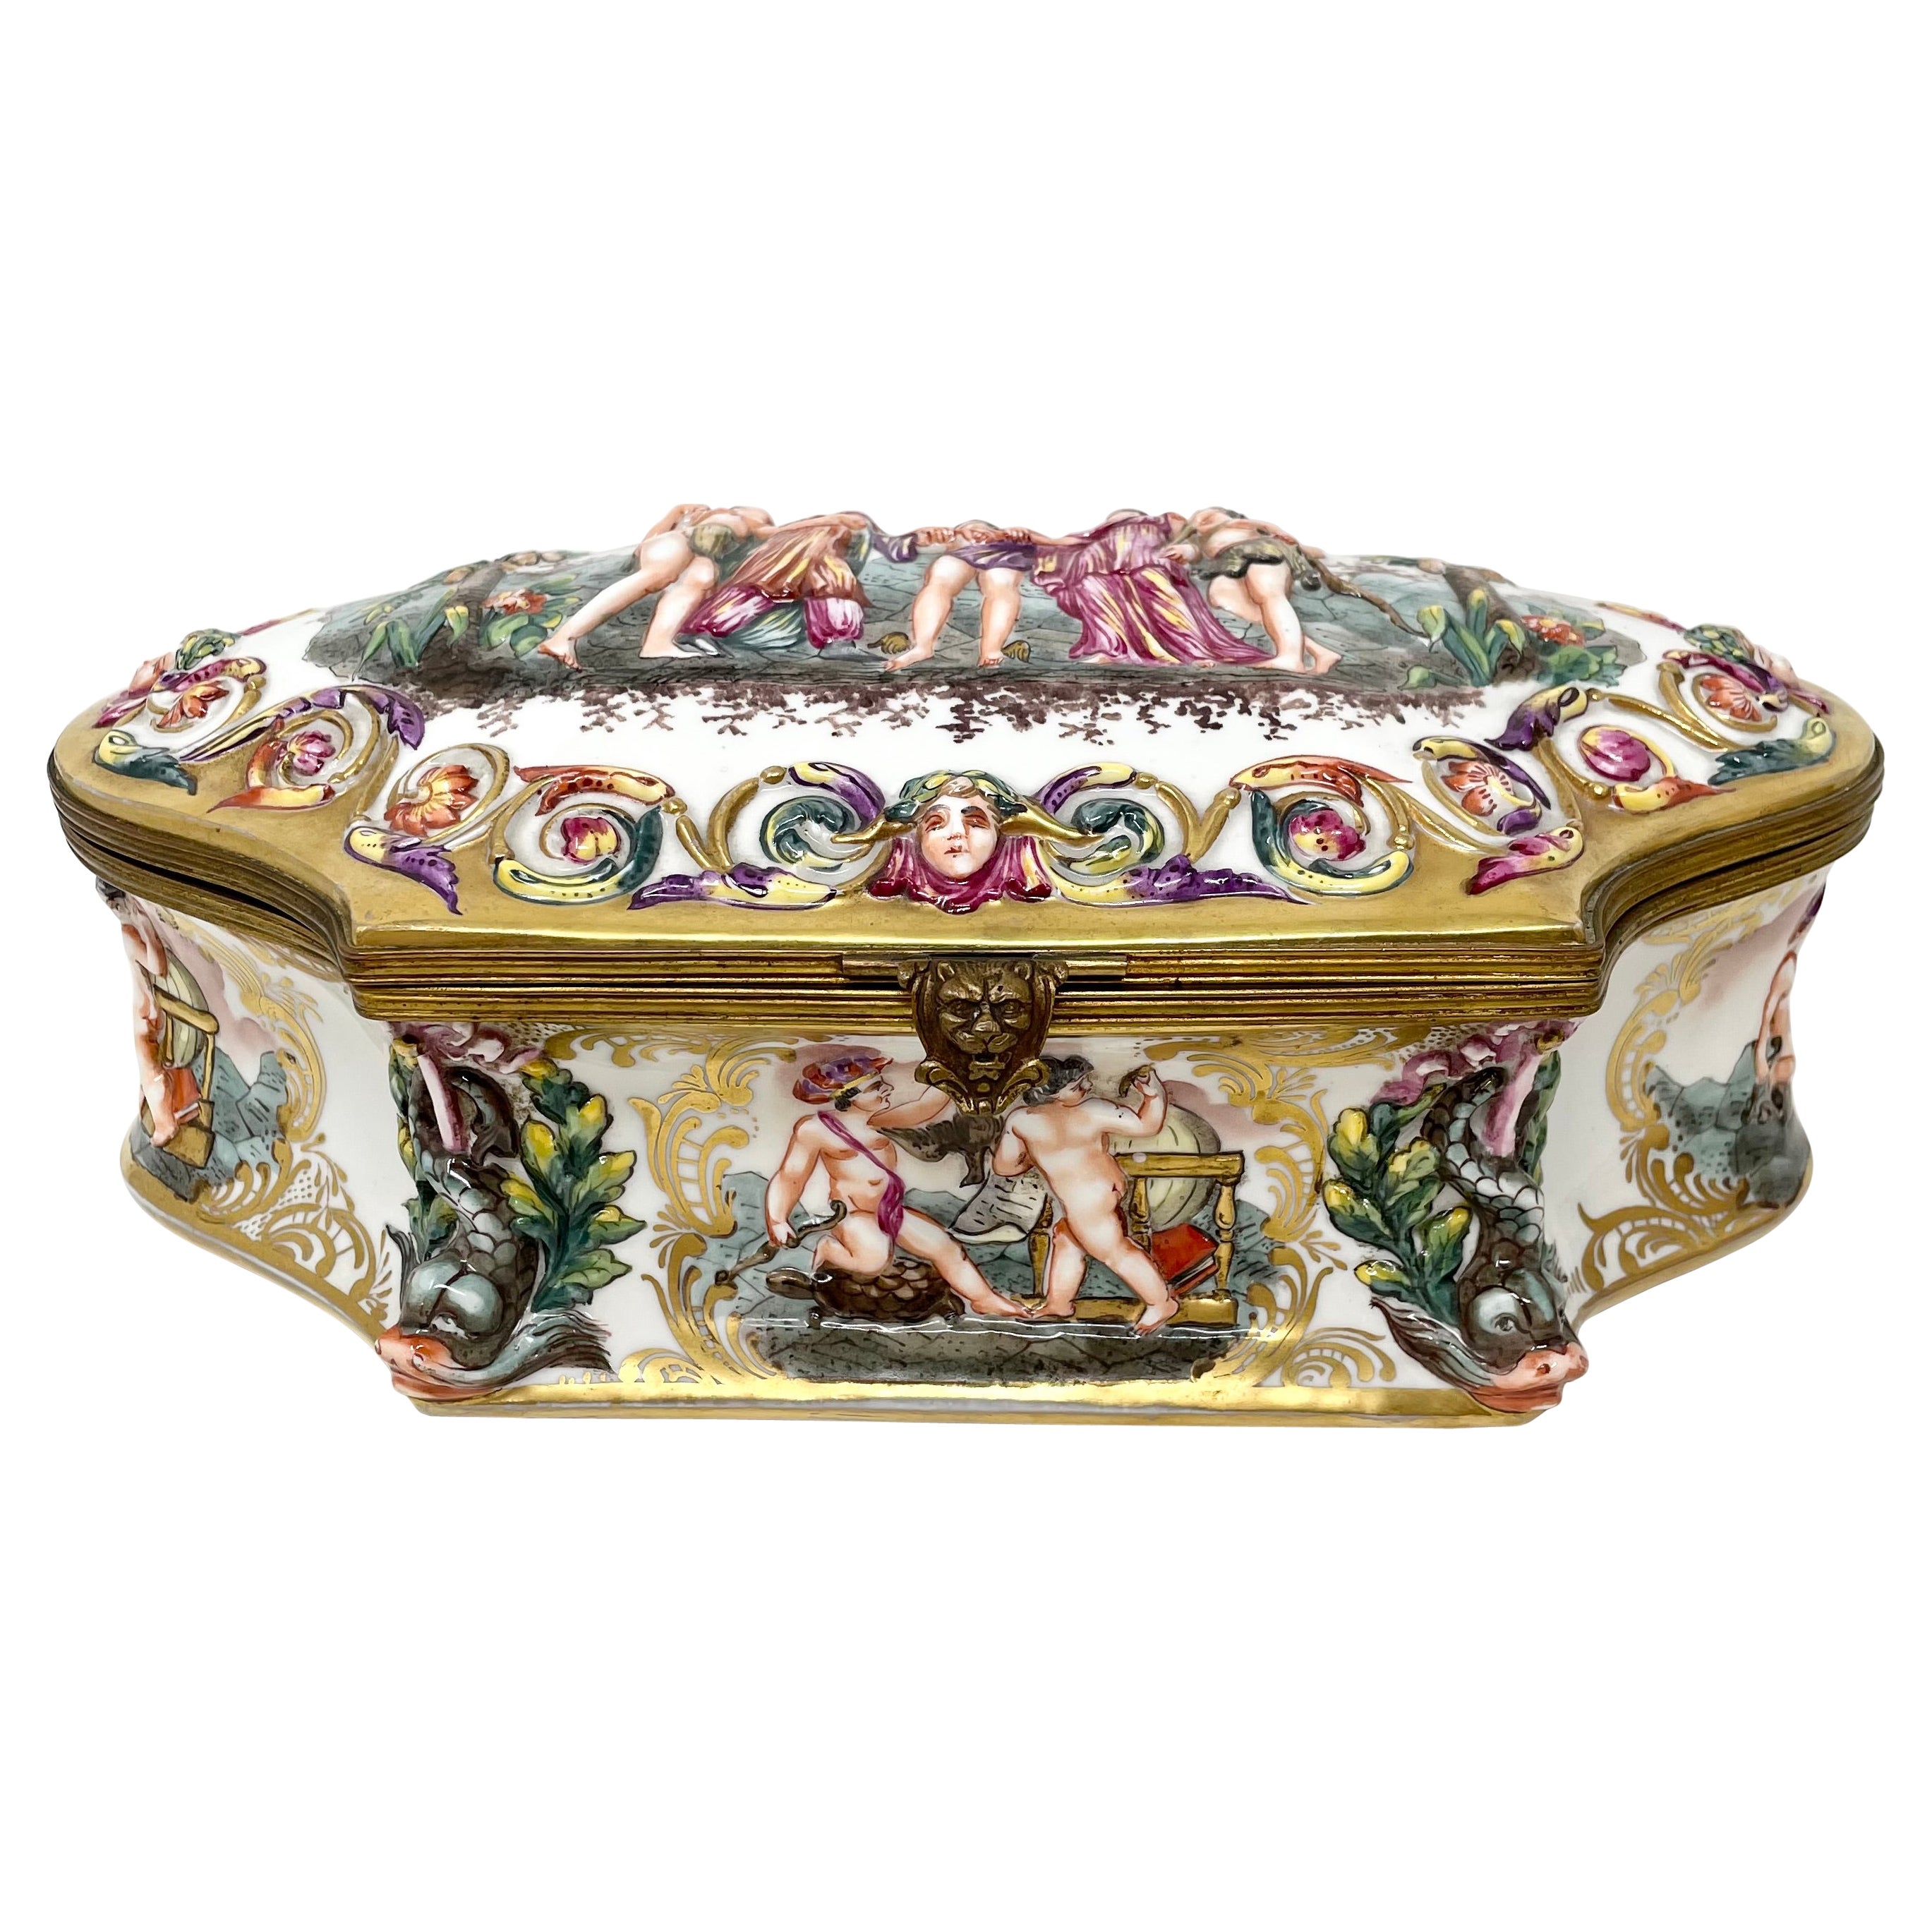 Large Antique Italian Capo di Monte Hand-Painted Porcelain Jewel Box circa 1900. For Sale